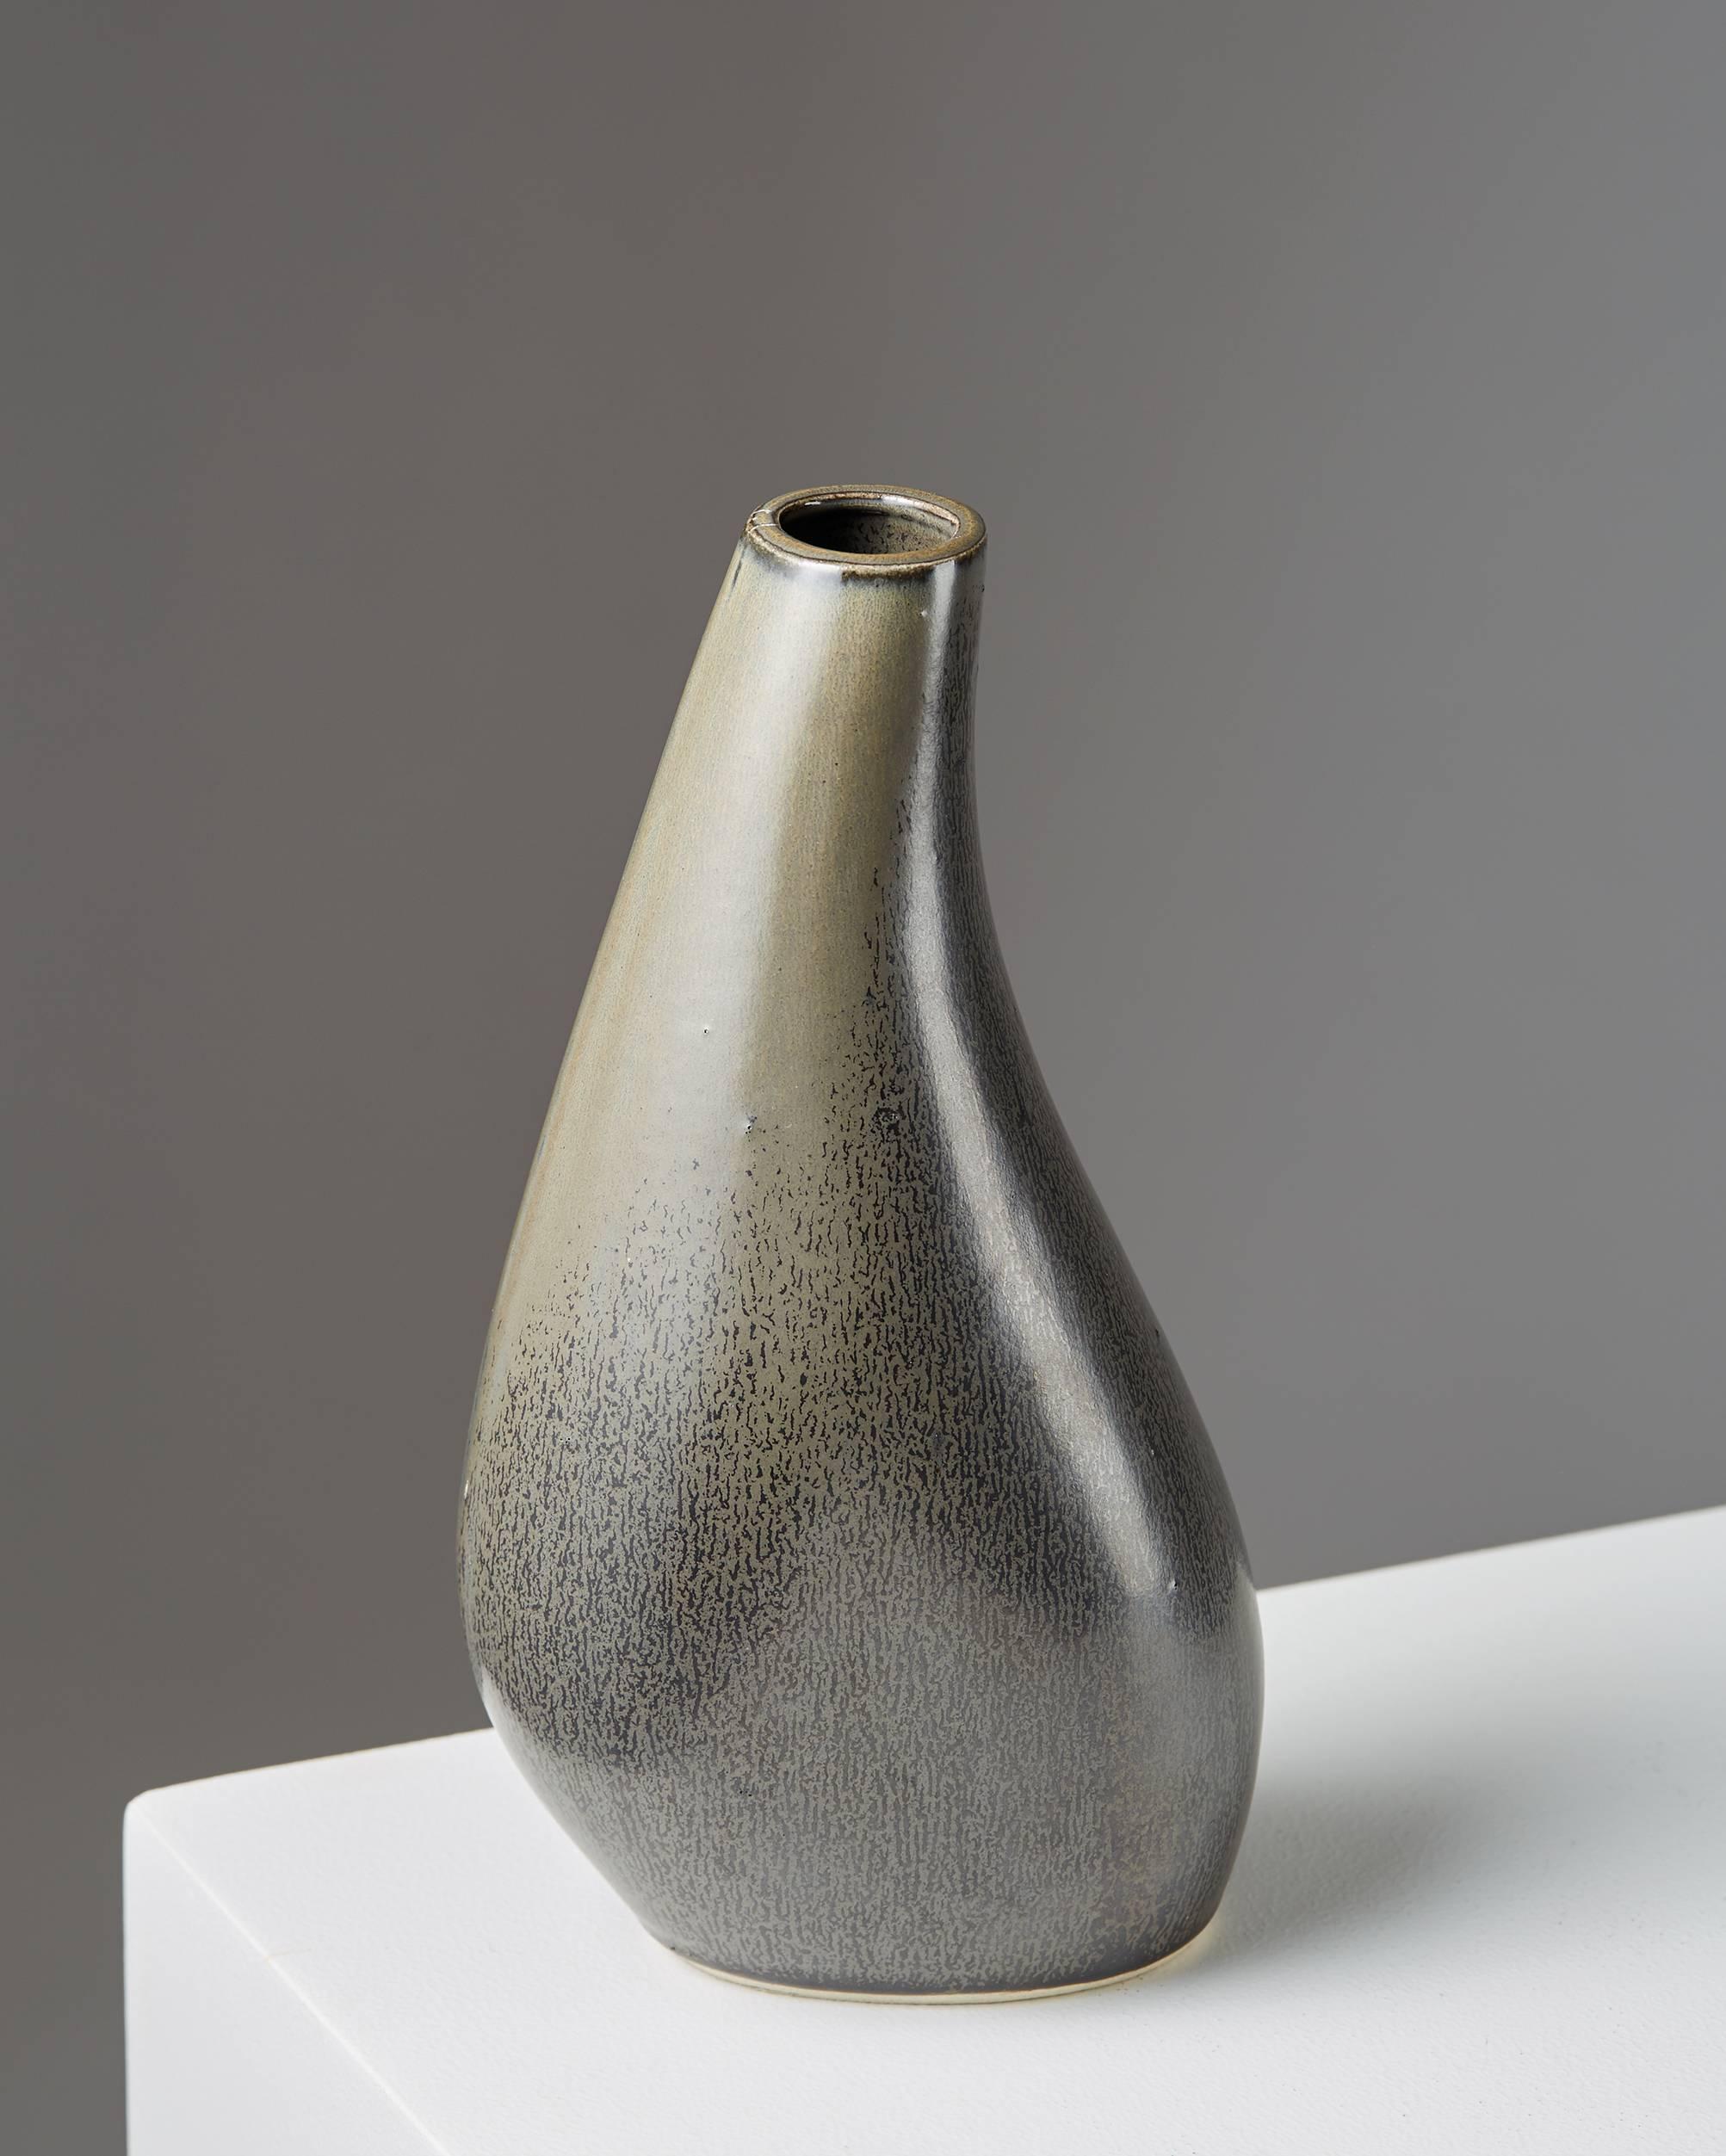 Vase designed by Kumakura Junkichi, 
Japan, 1970s.
Stoneware.

Measures: H 24 cm/ 9 1/2